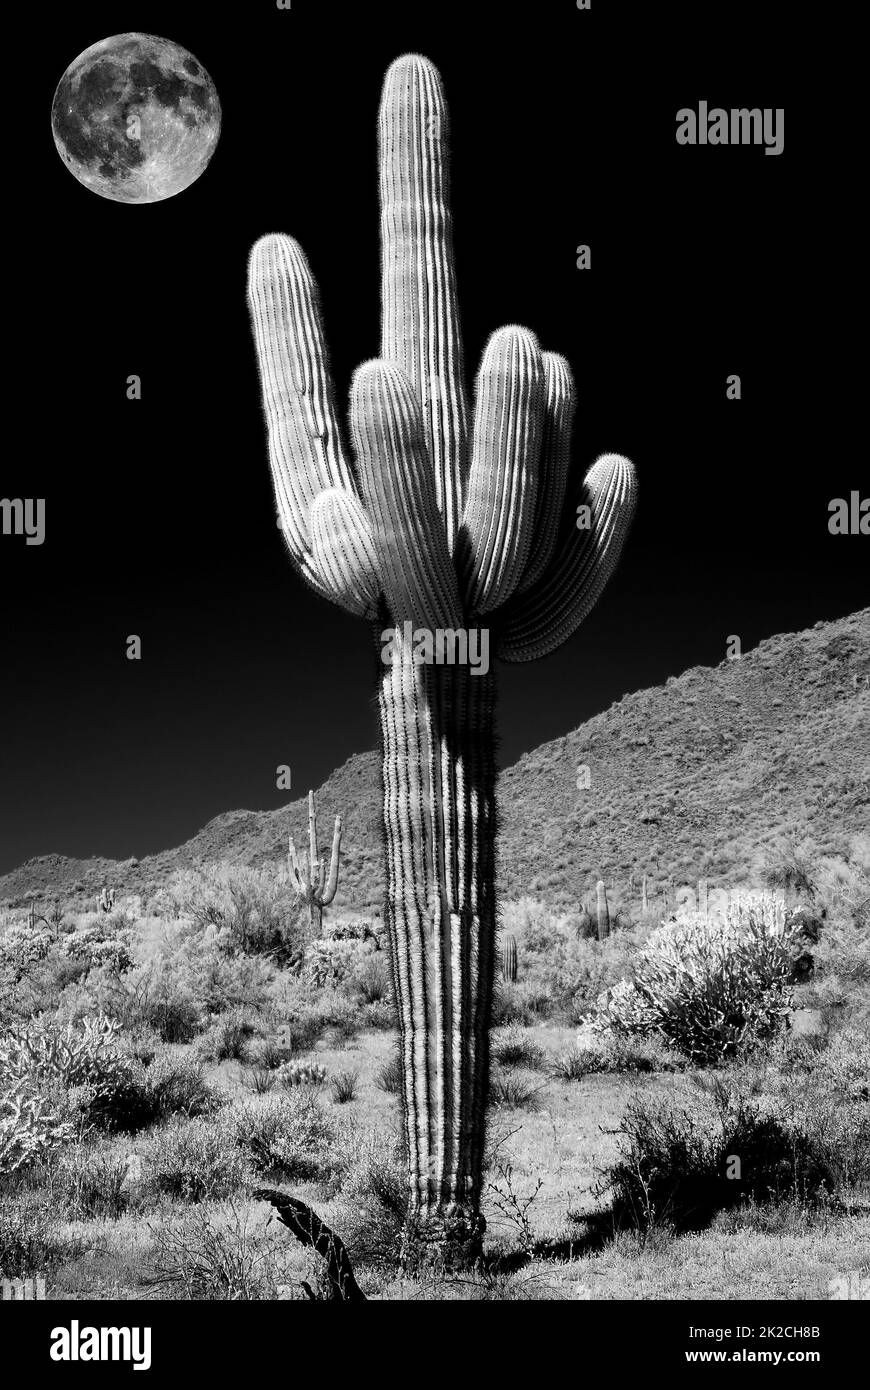 Saguaro Cactus cereus giganteus pleine Lune en infrarouge Banque D'Images